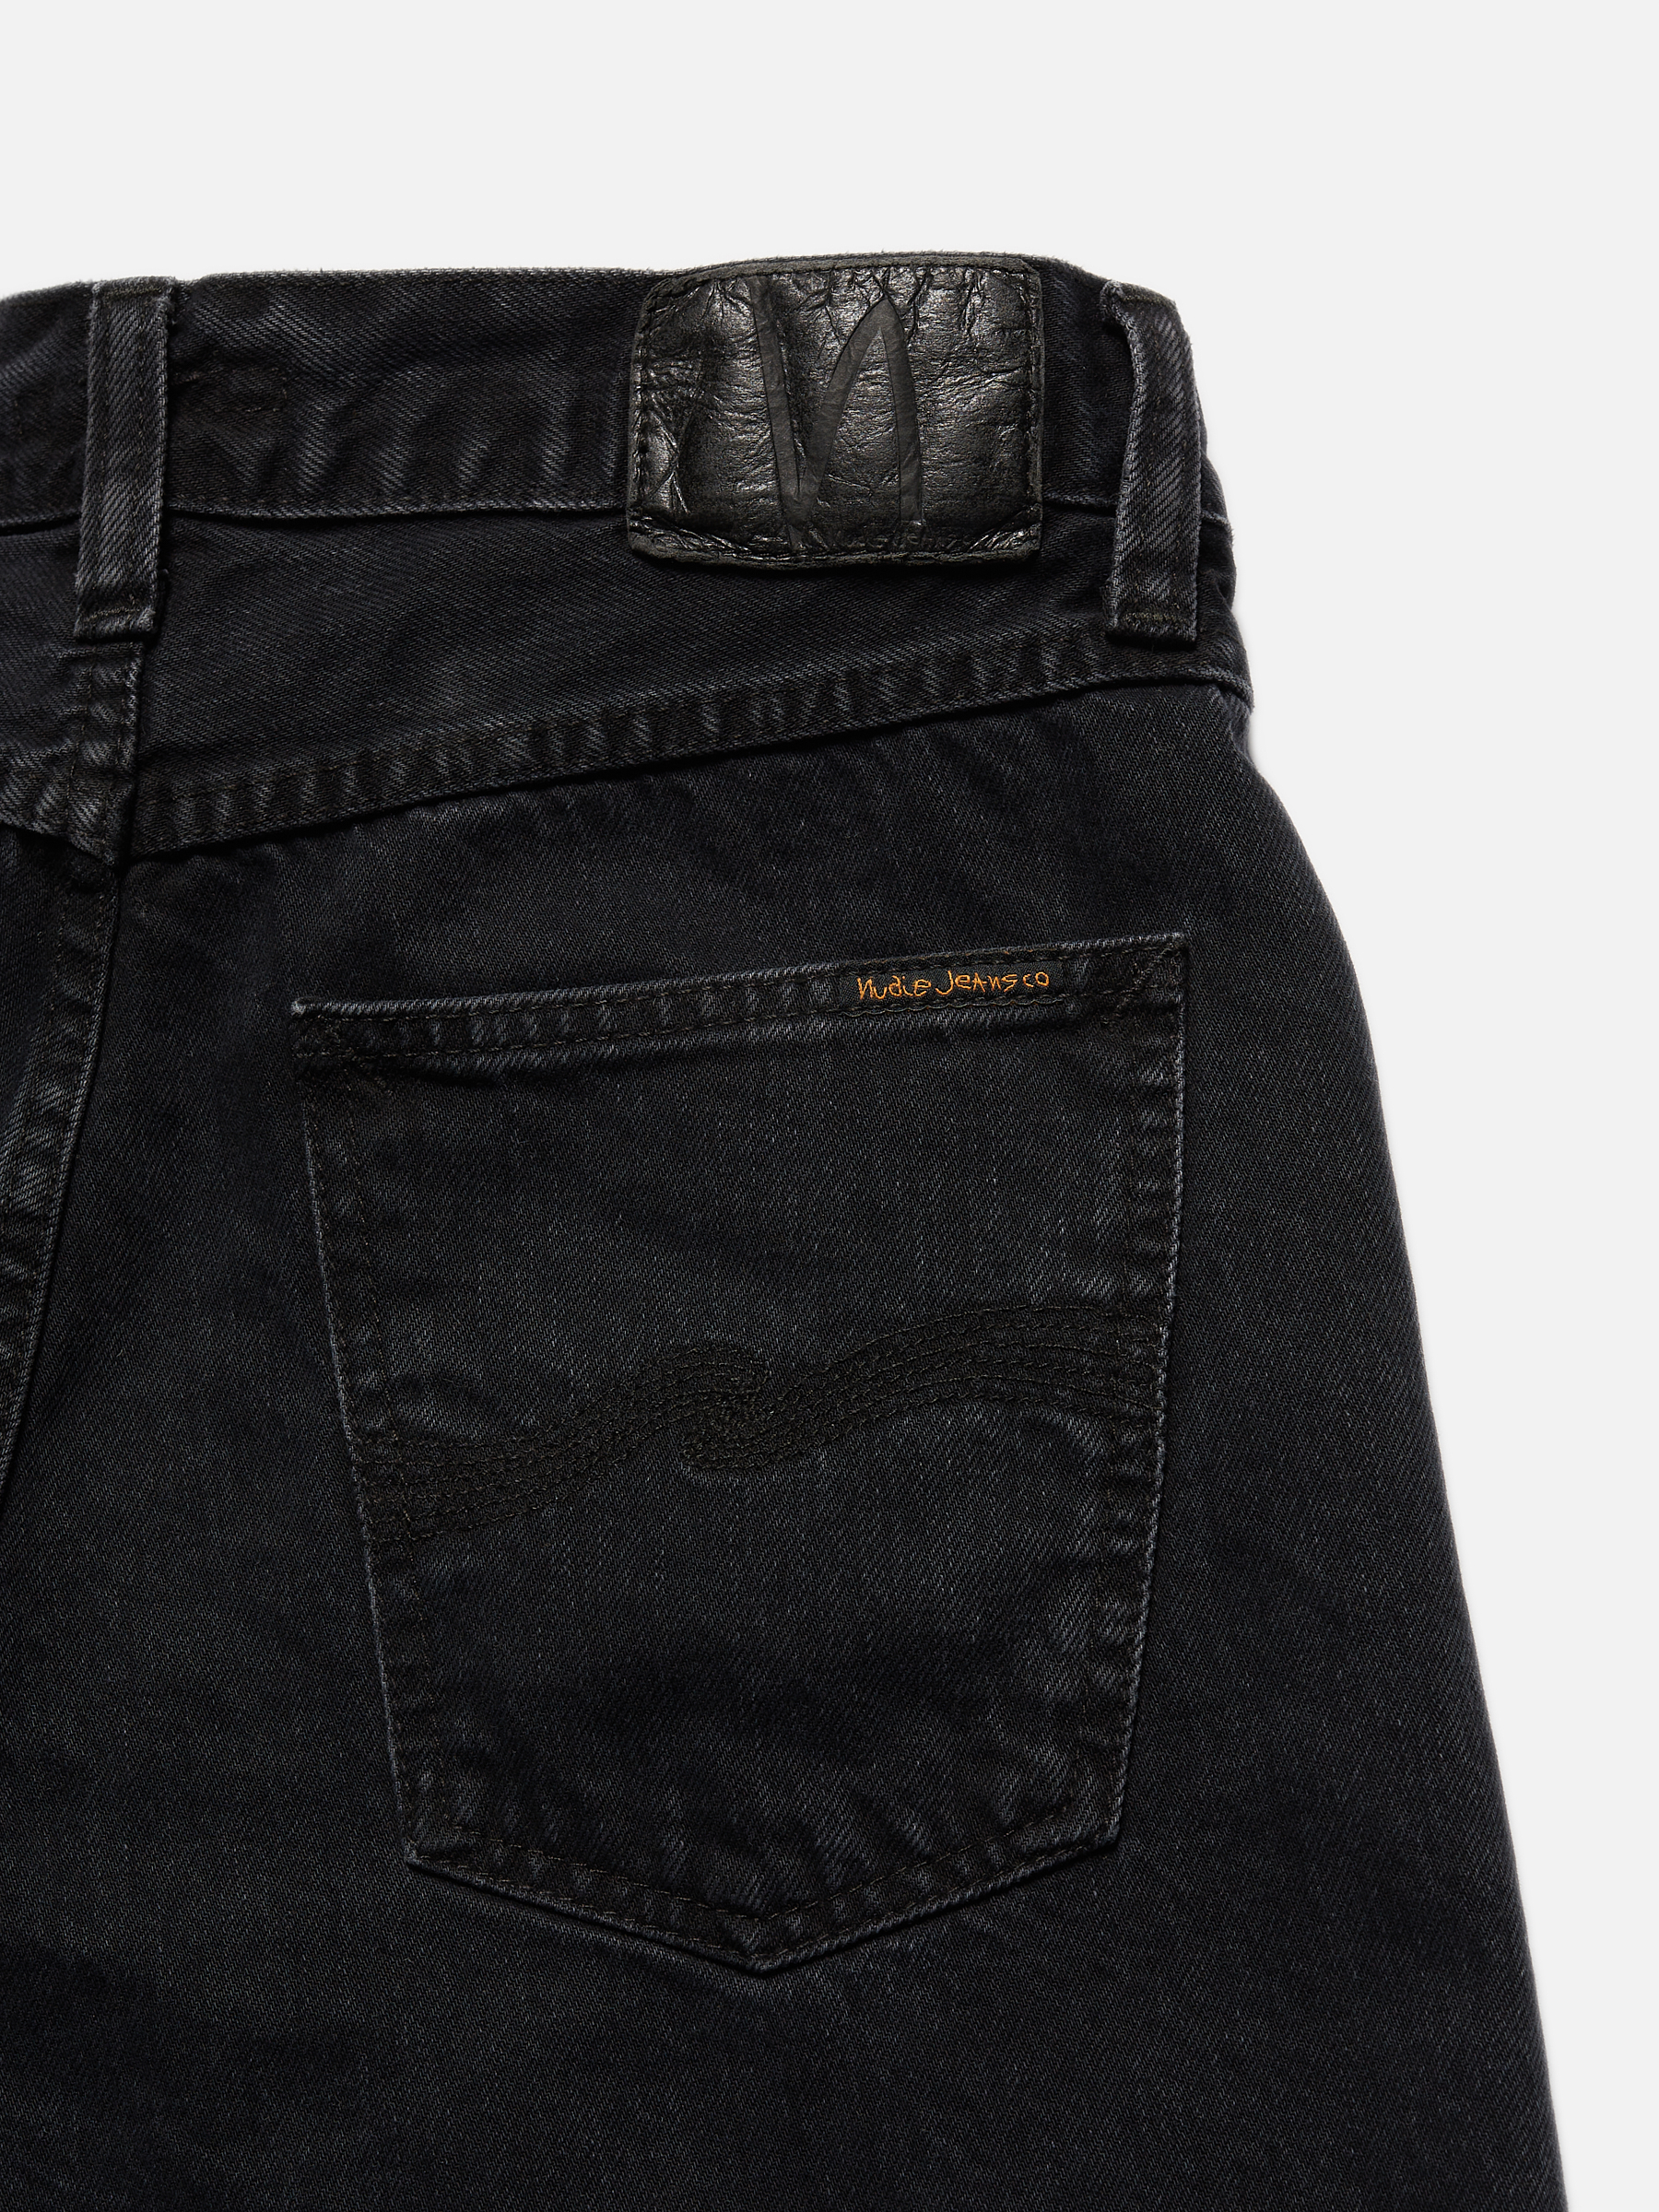 Jeans-Shorts Josh - Black Ink